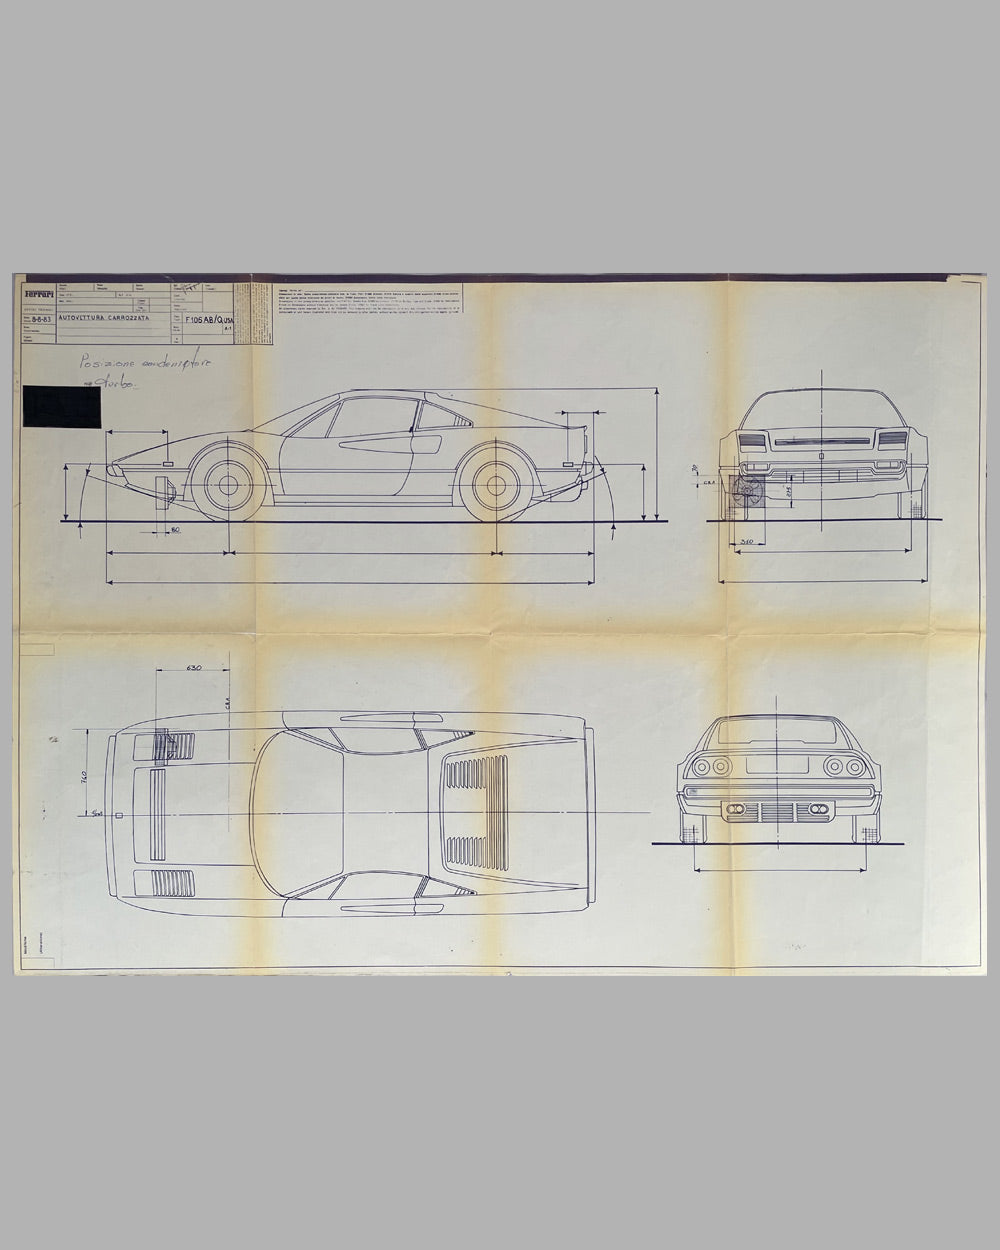 Ferrari 308 GTB factory period blueprint, dated 1983